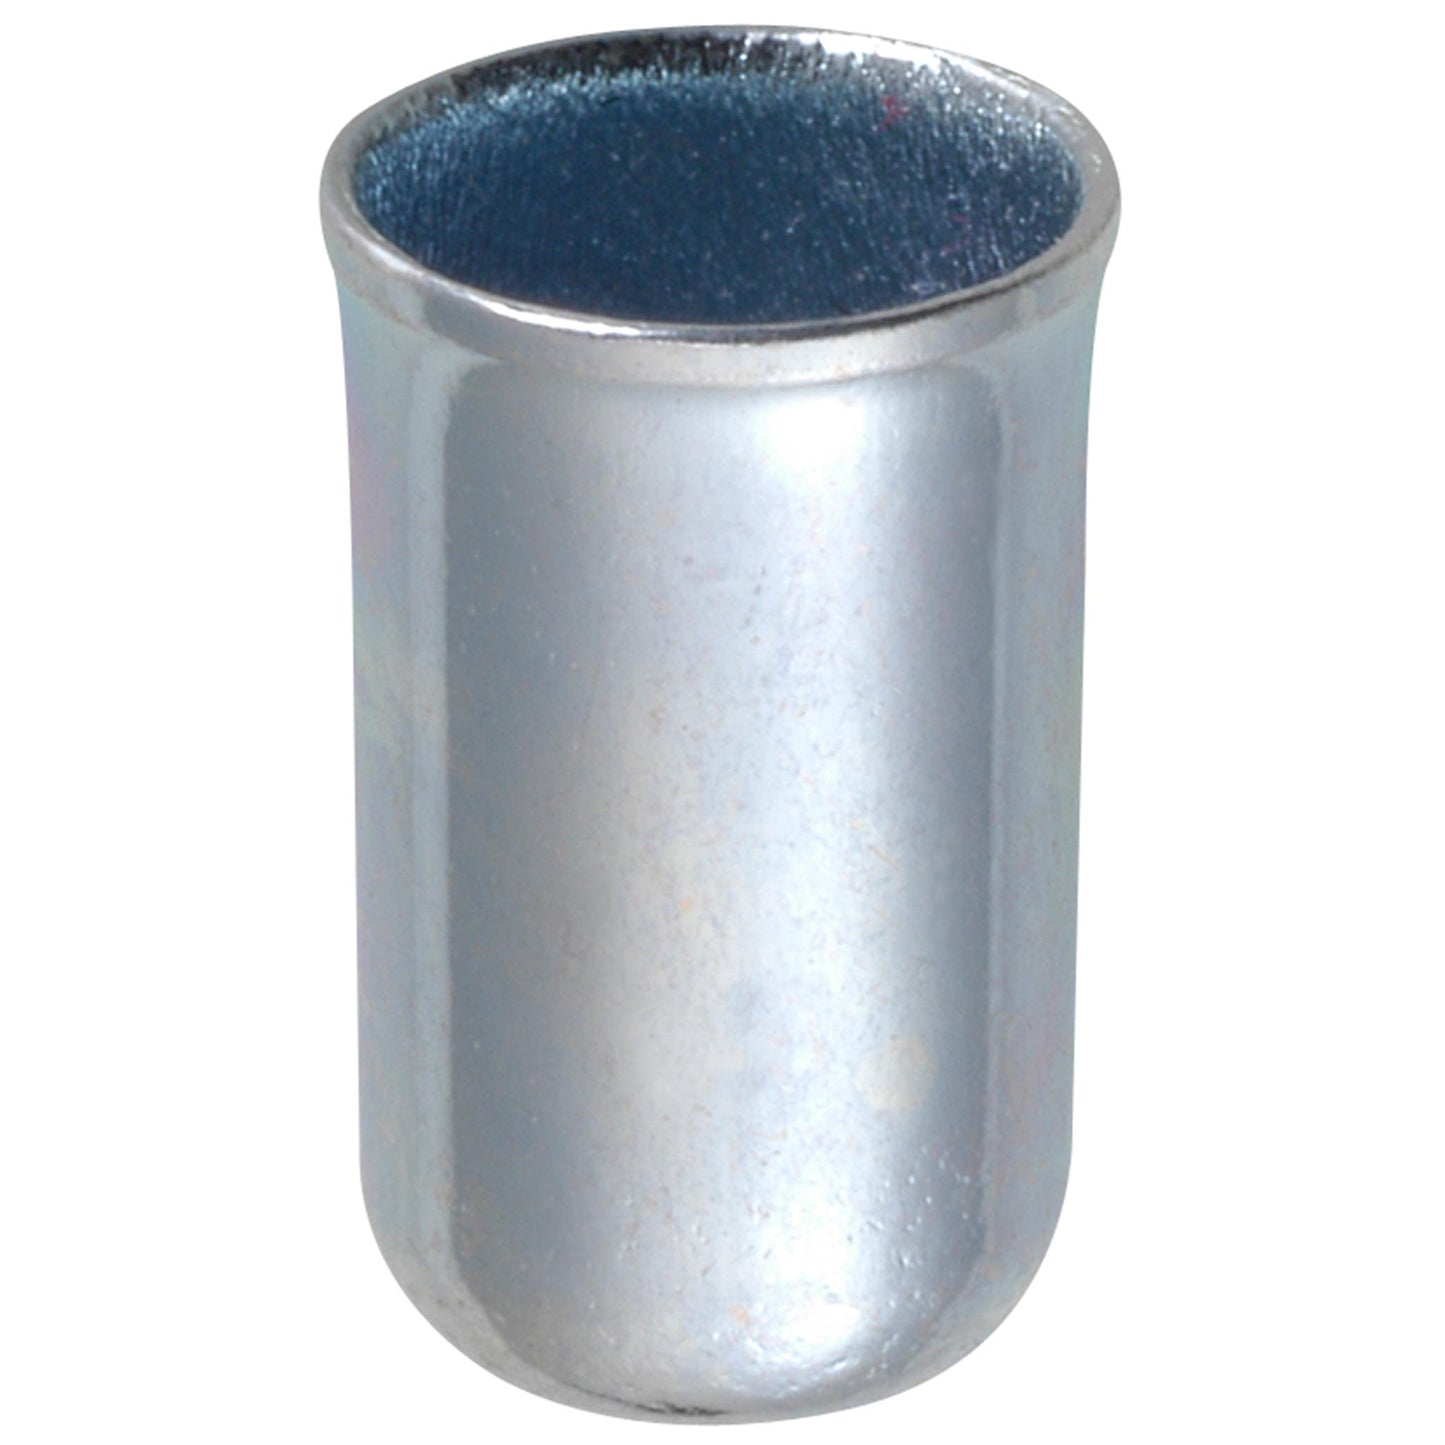 End sleeve 10 mm galvanized steel